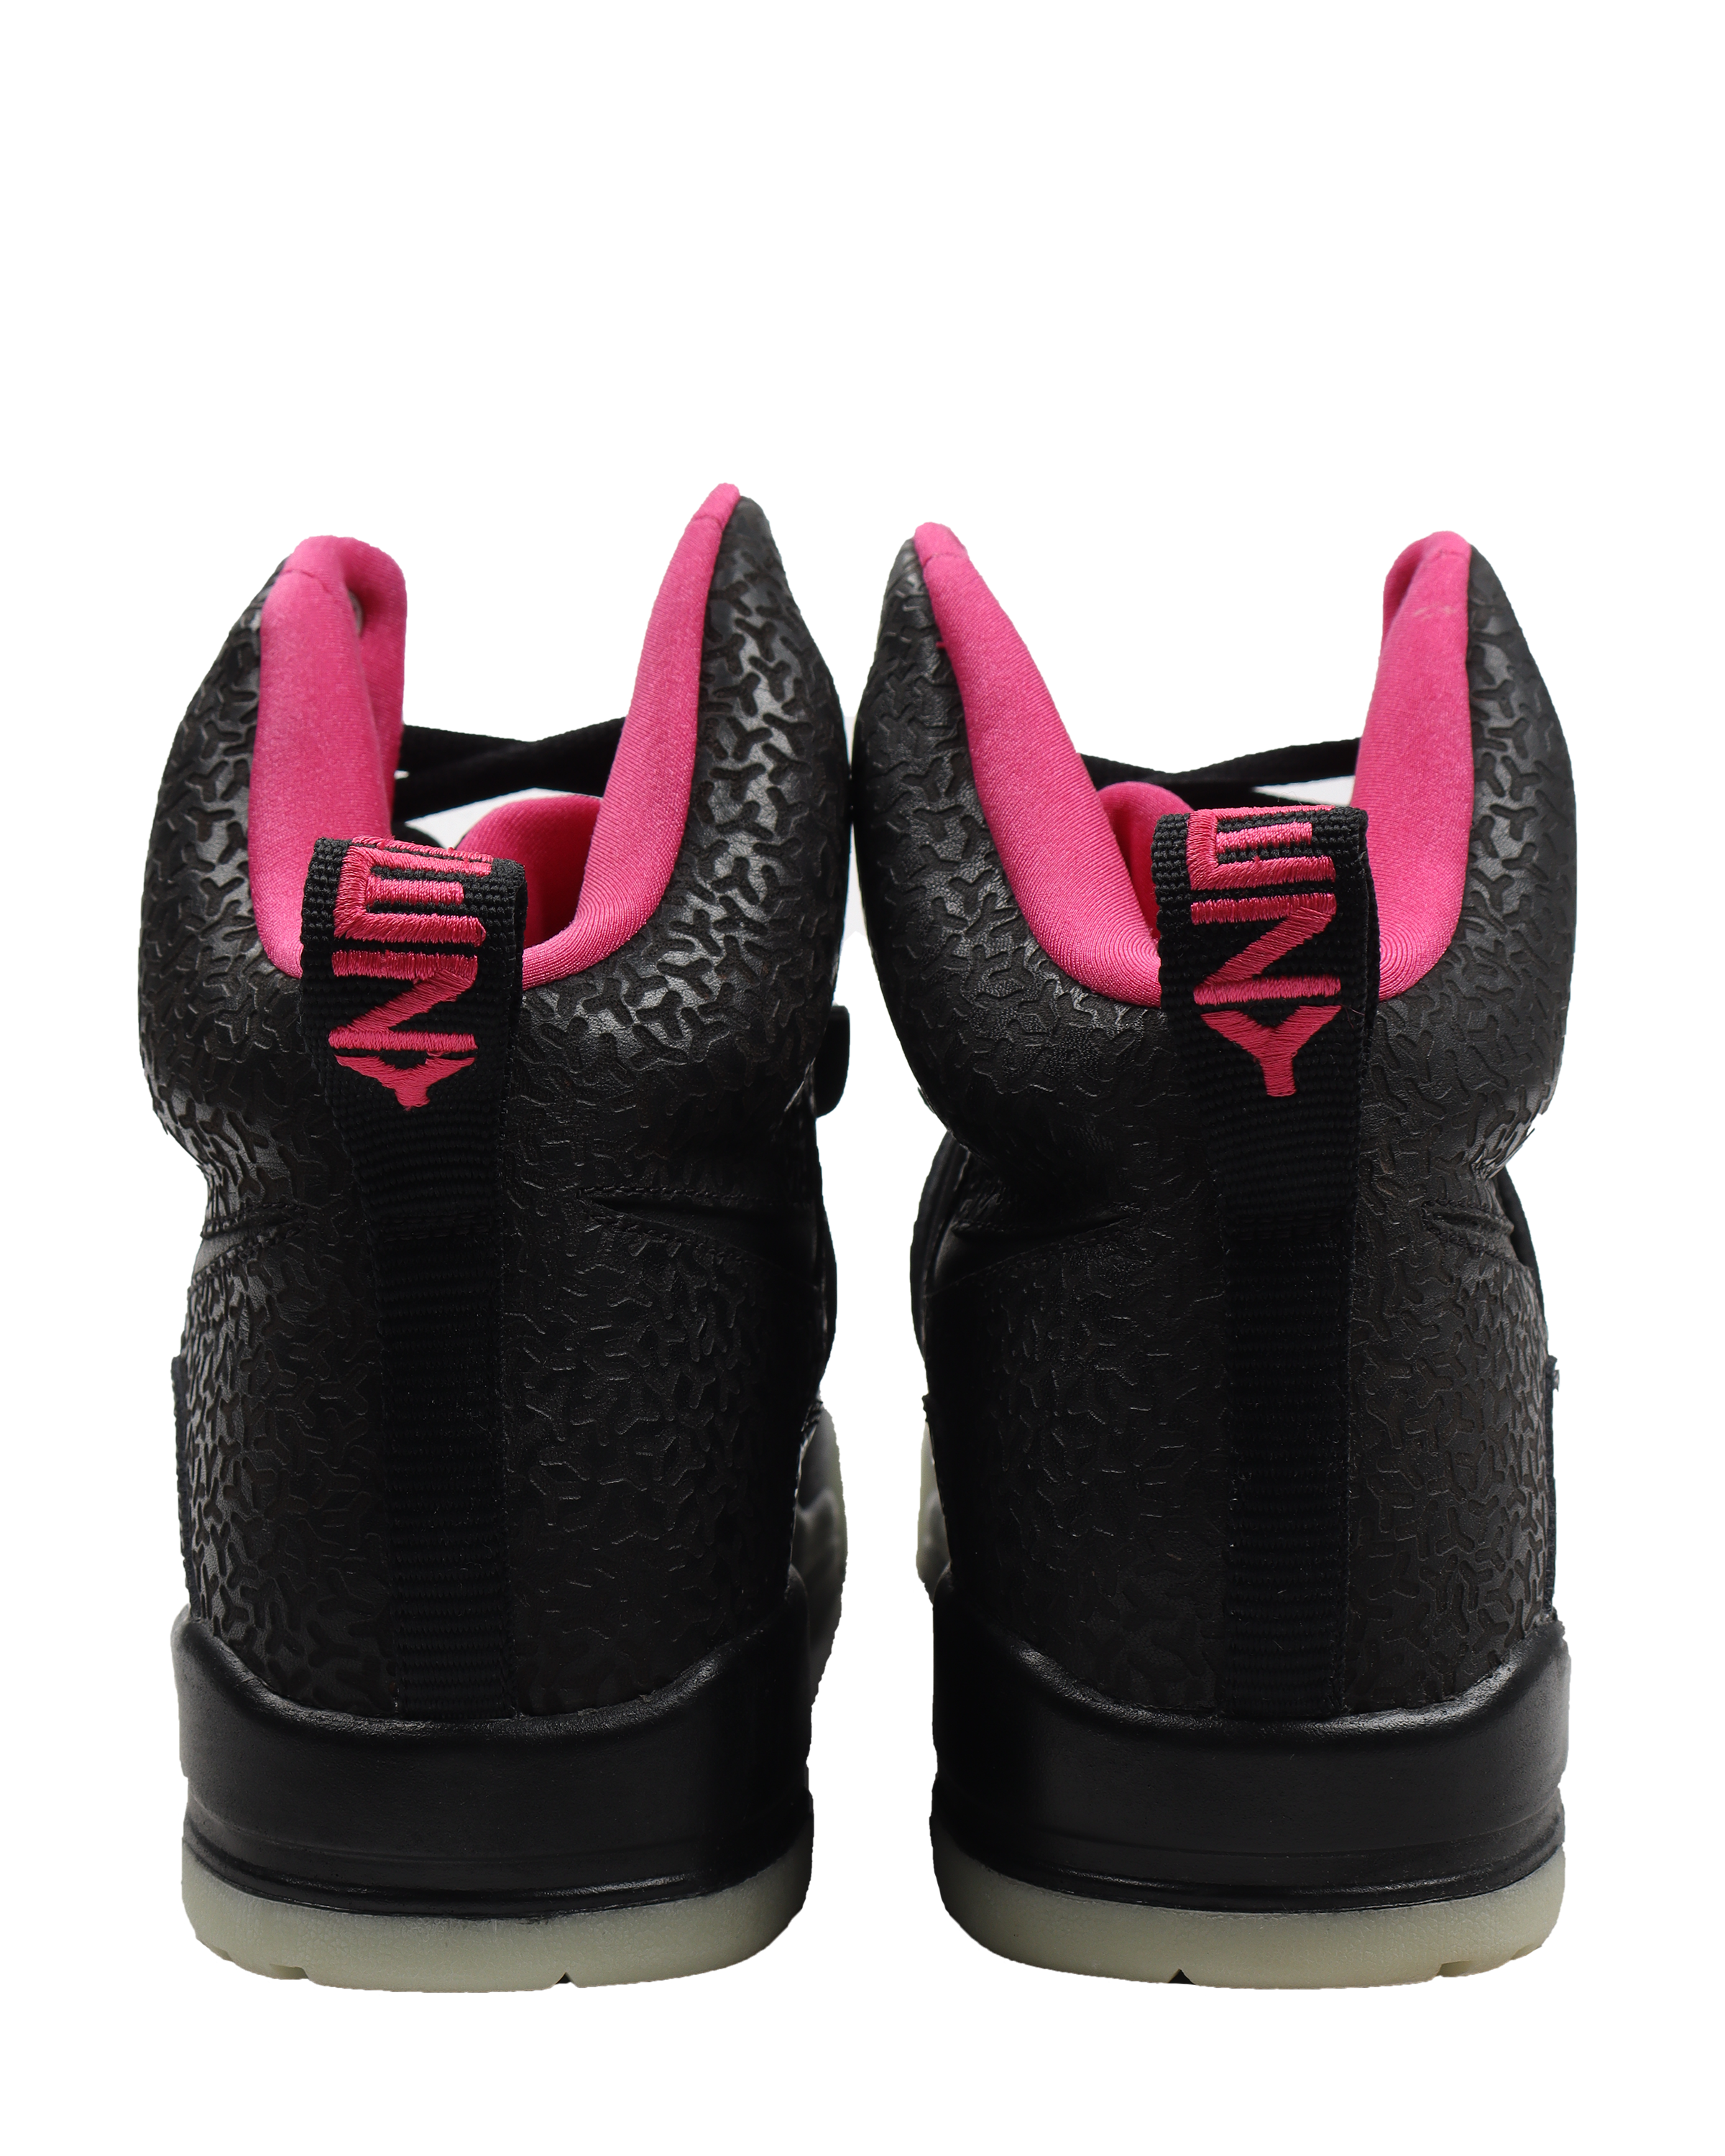 Nike Air Yeezy 1 Blink Black Pink Size 9 Super Clean w/ Receipt 366164-003